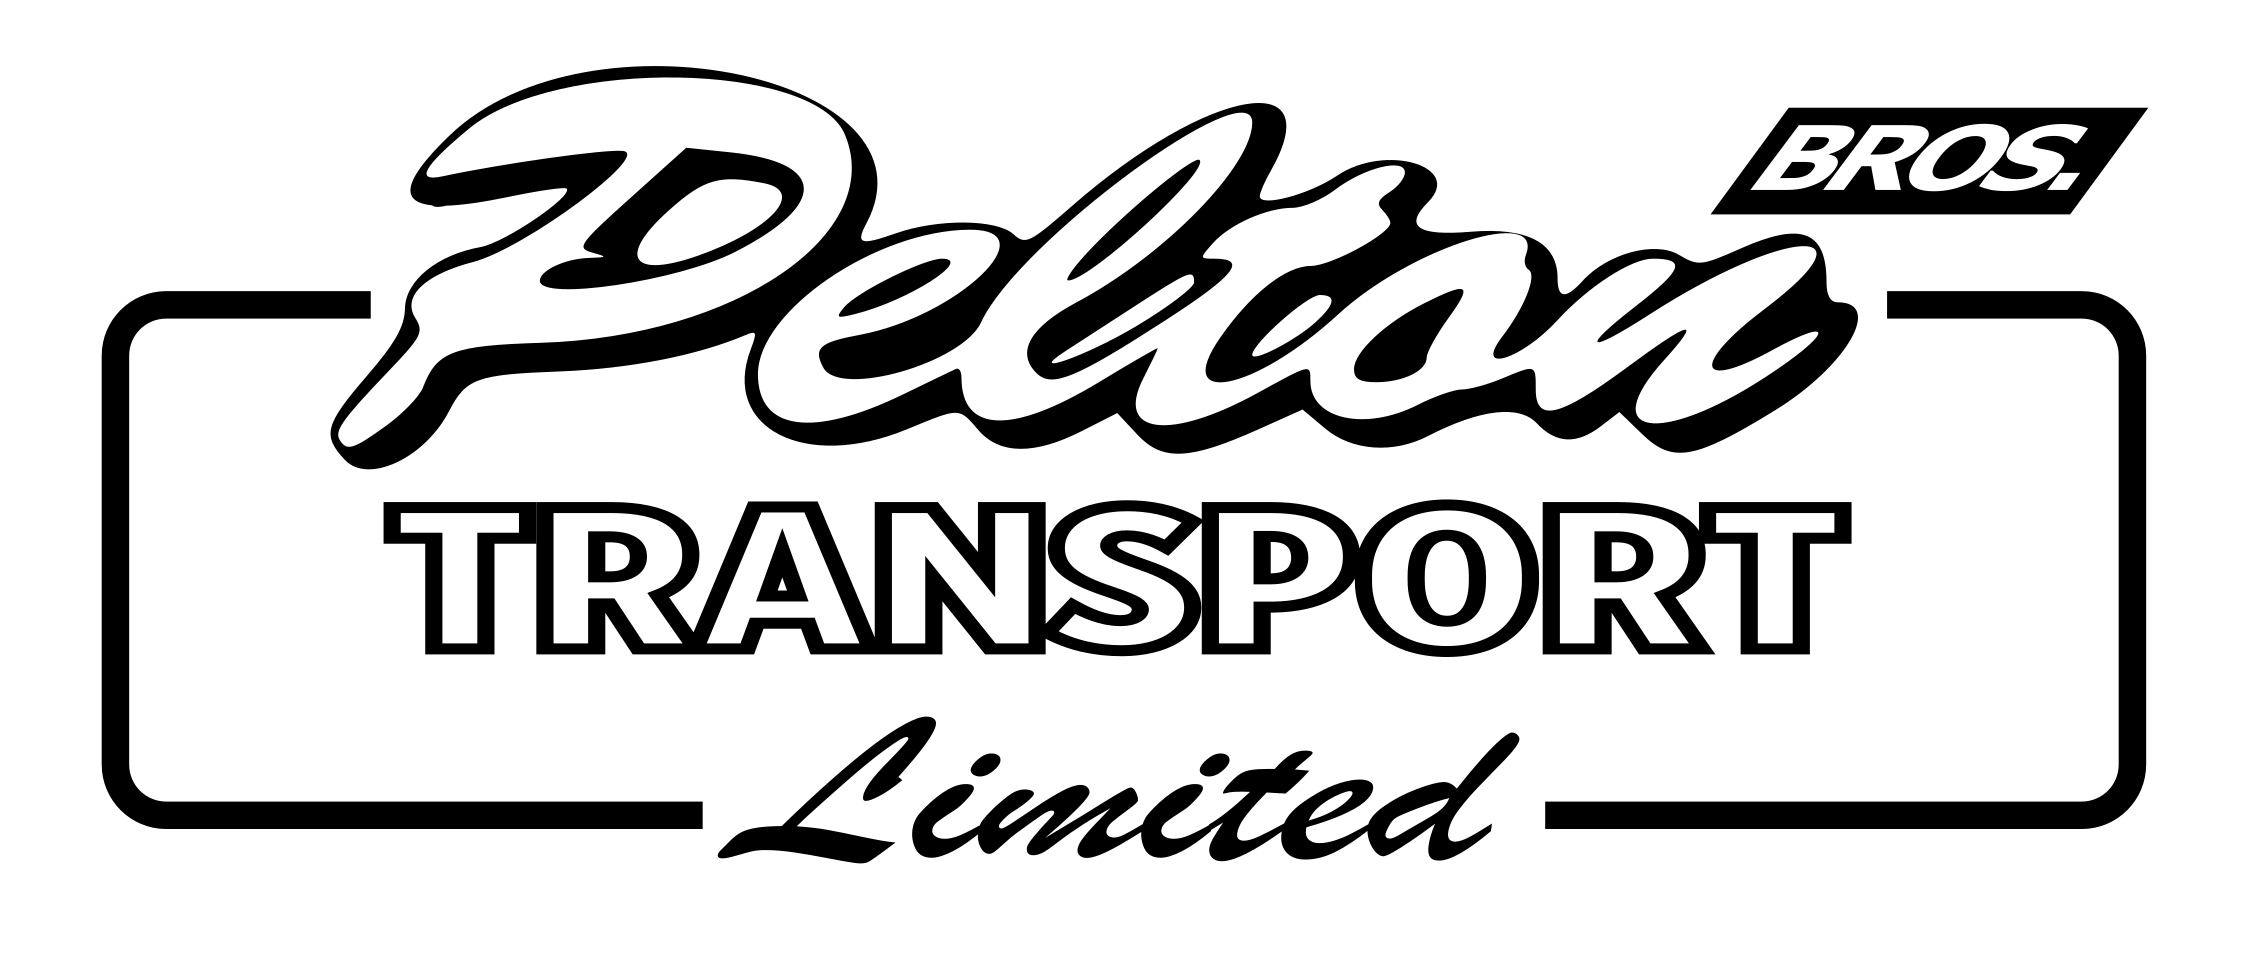 Pelton Bros Transport